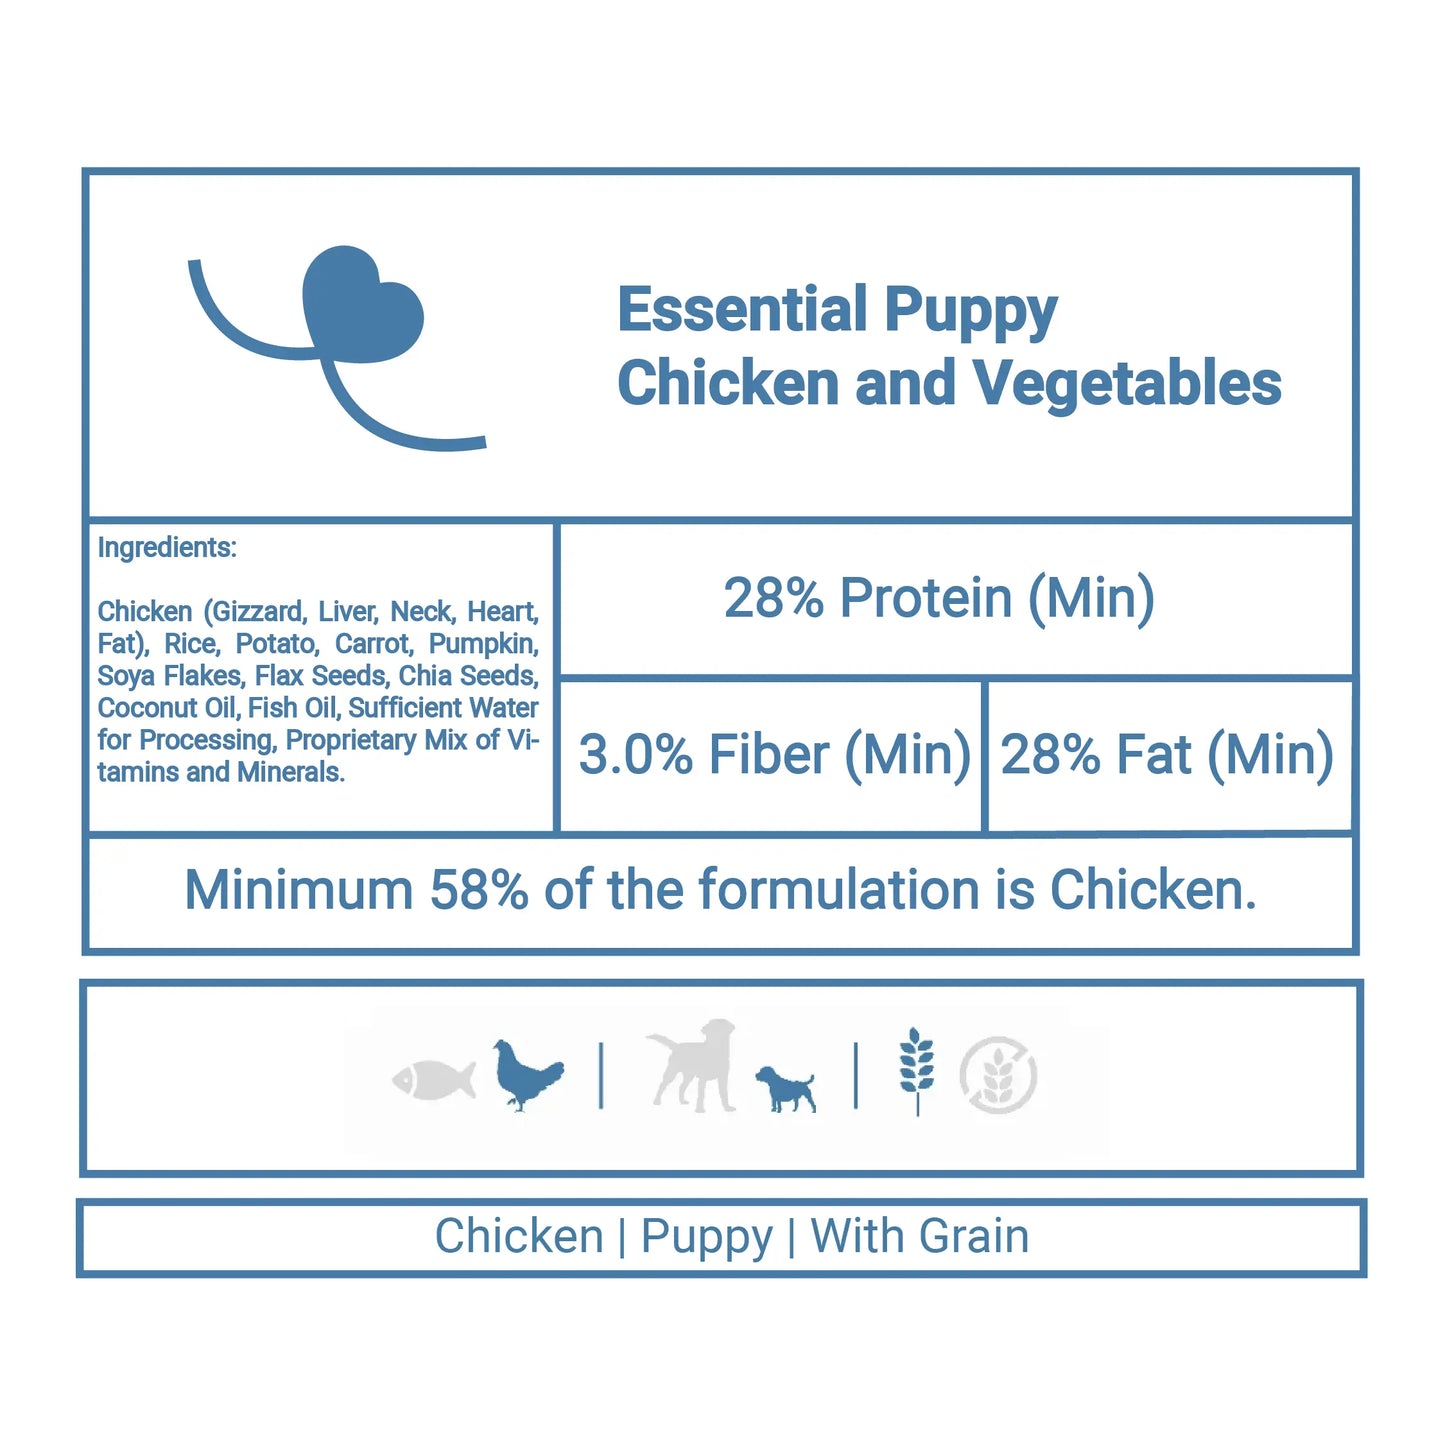 Essential Puppy Chicken and Vegetables